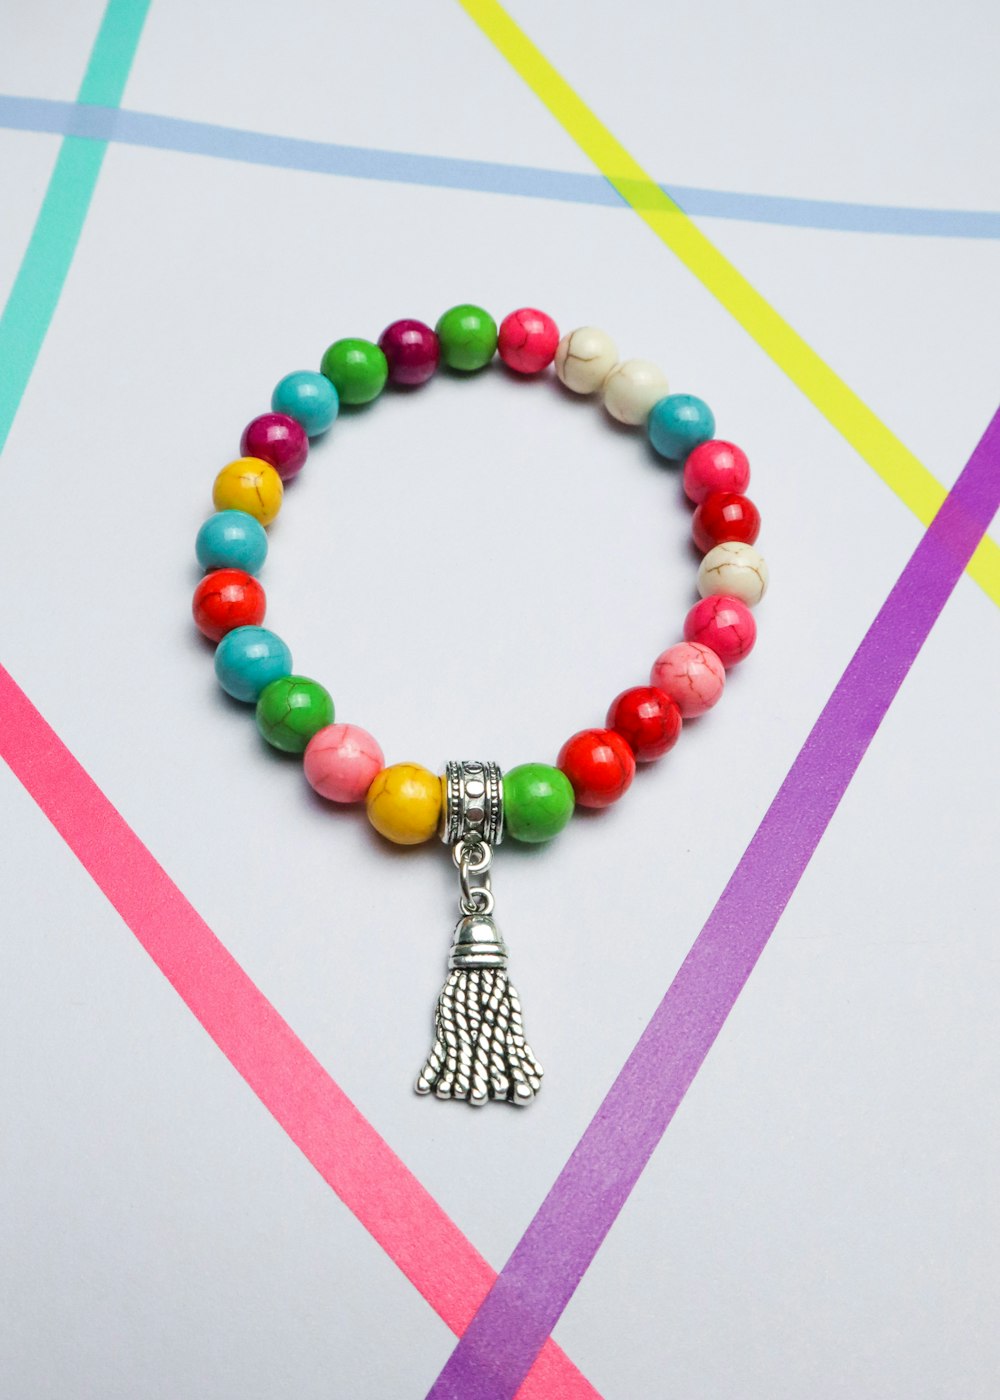 a colorful beaded bracelet with a hamsa hand charm